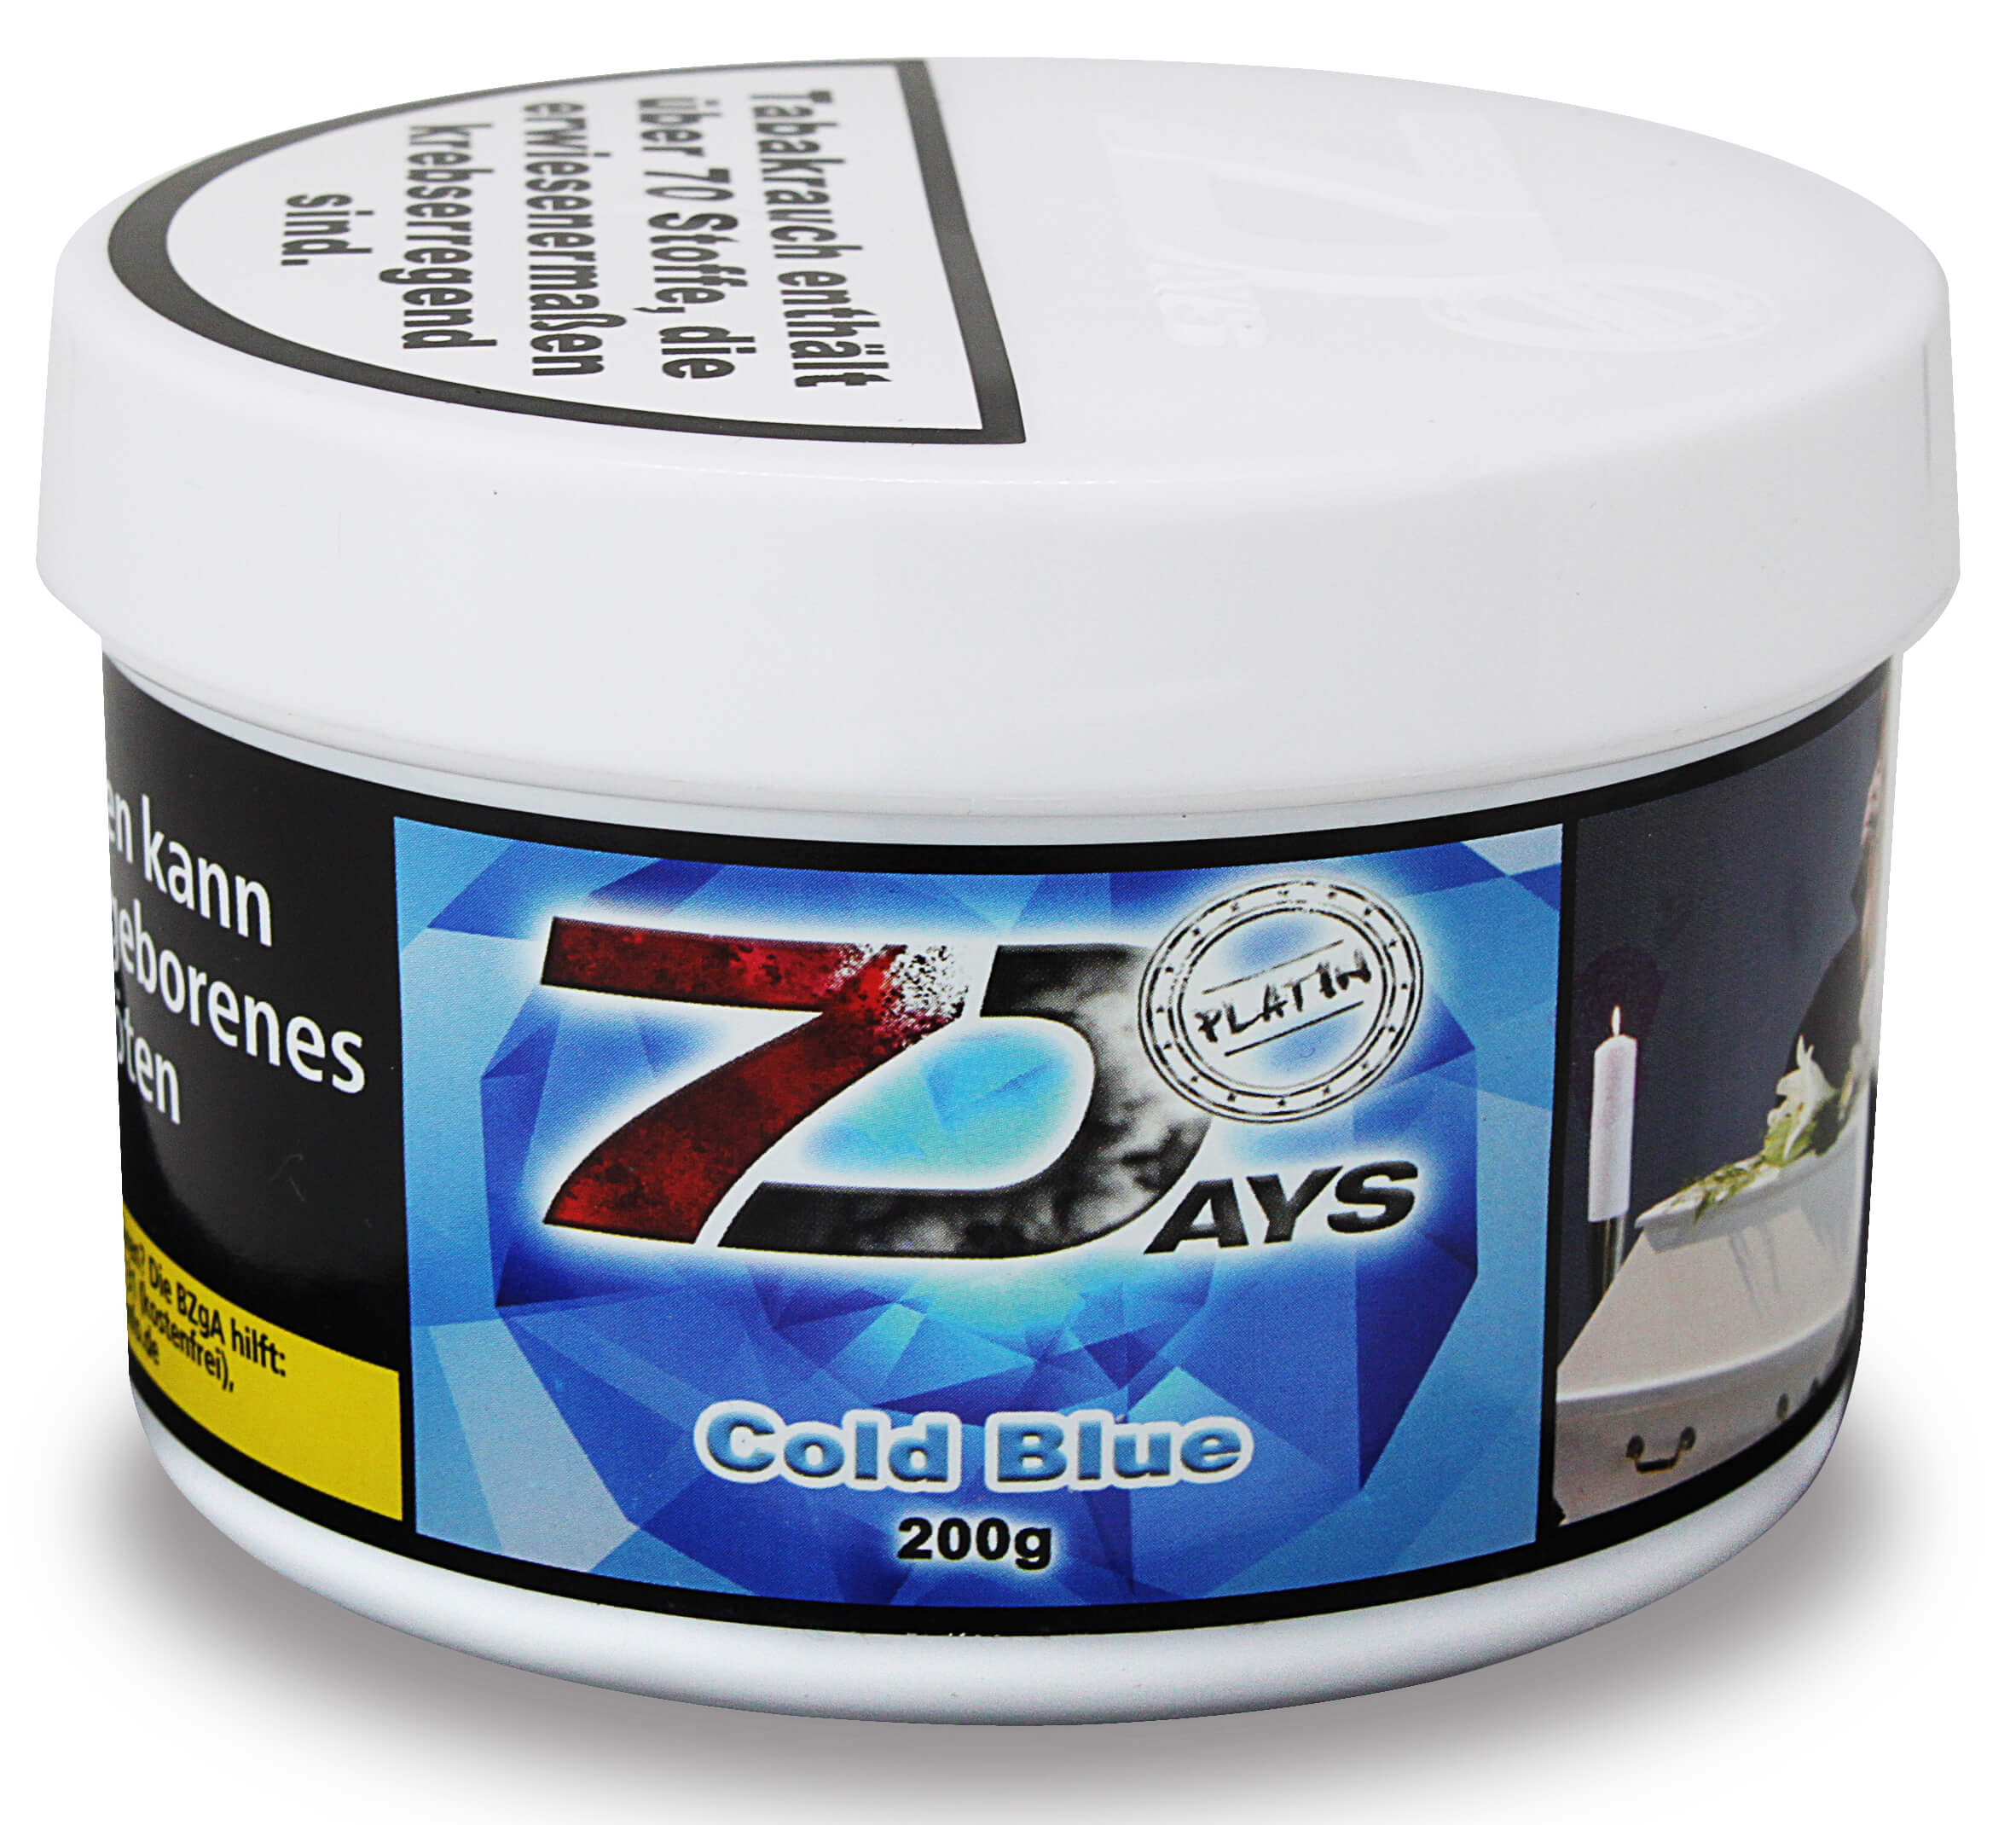 7 Days Platin Tabak - Cold Blue 200g